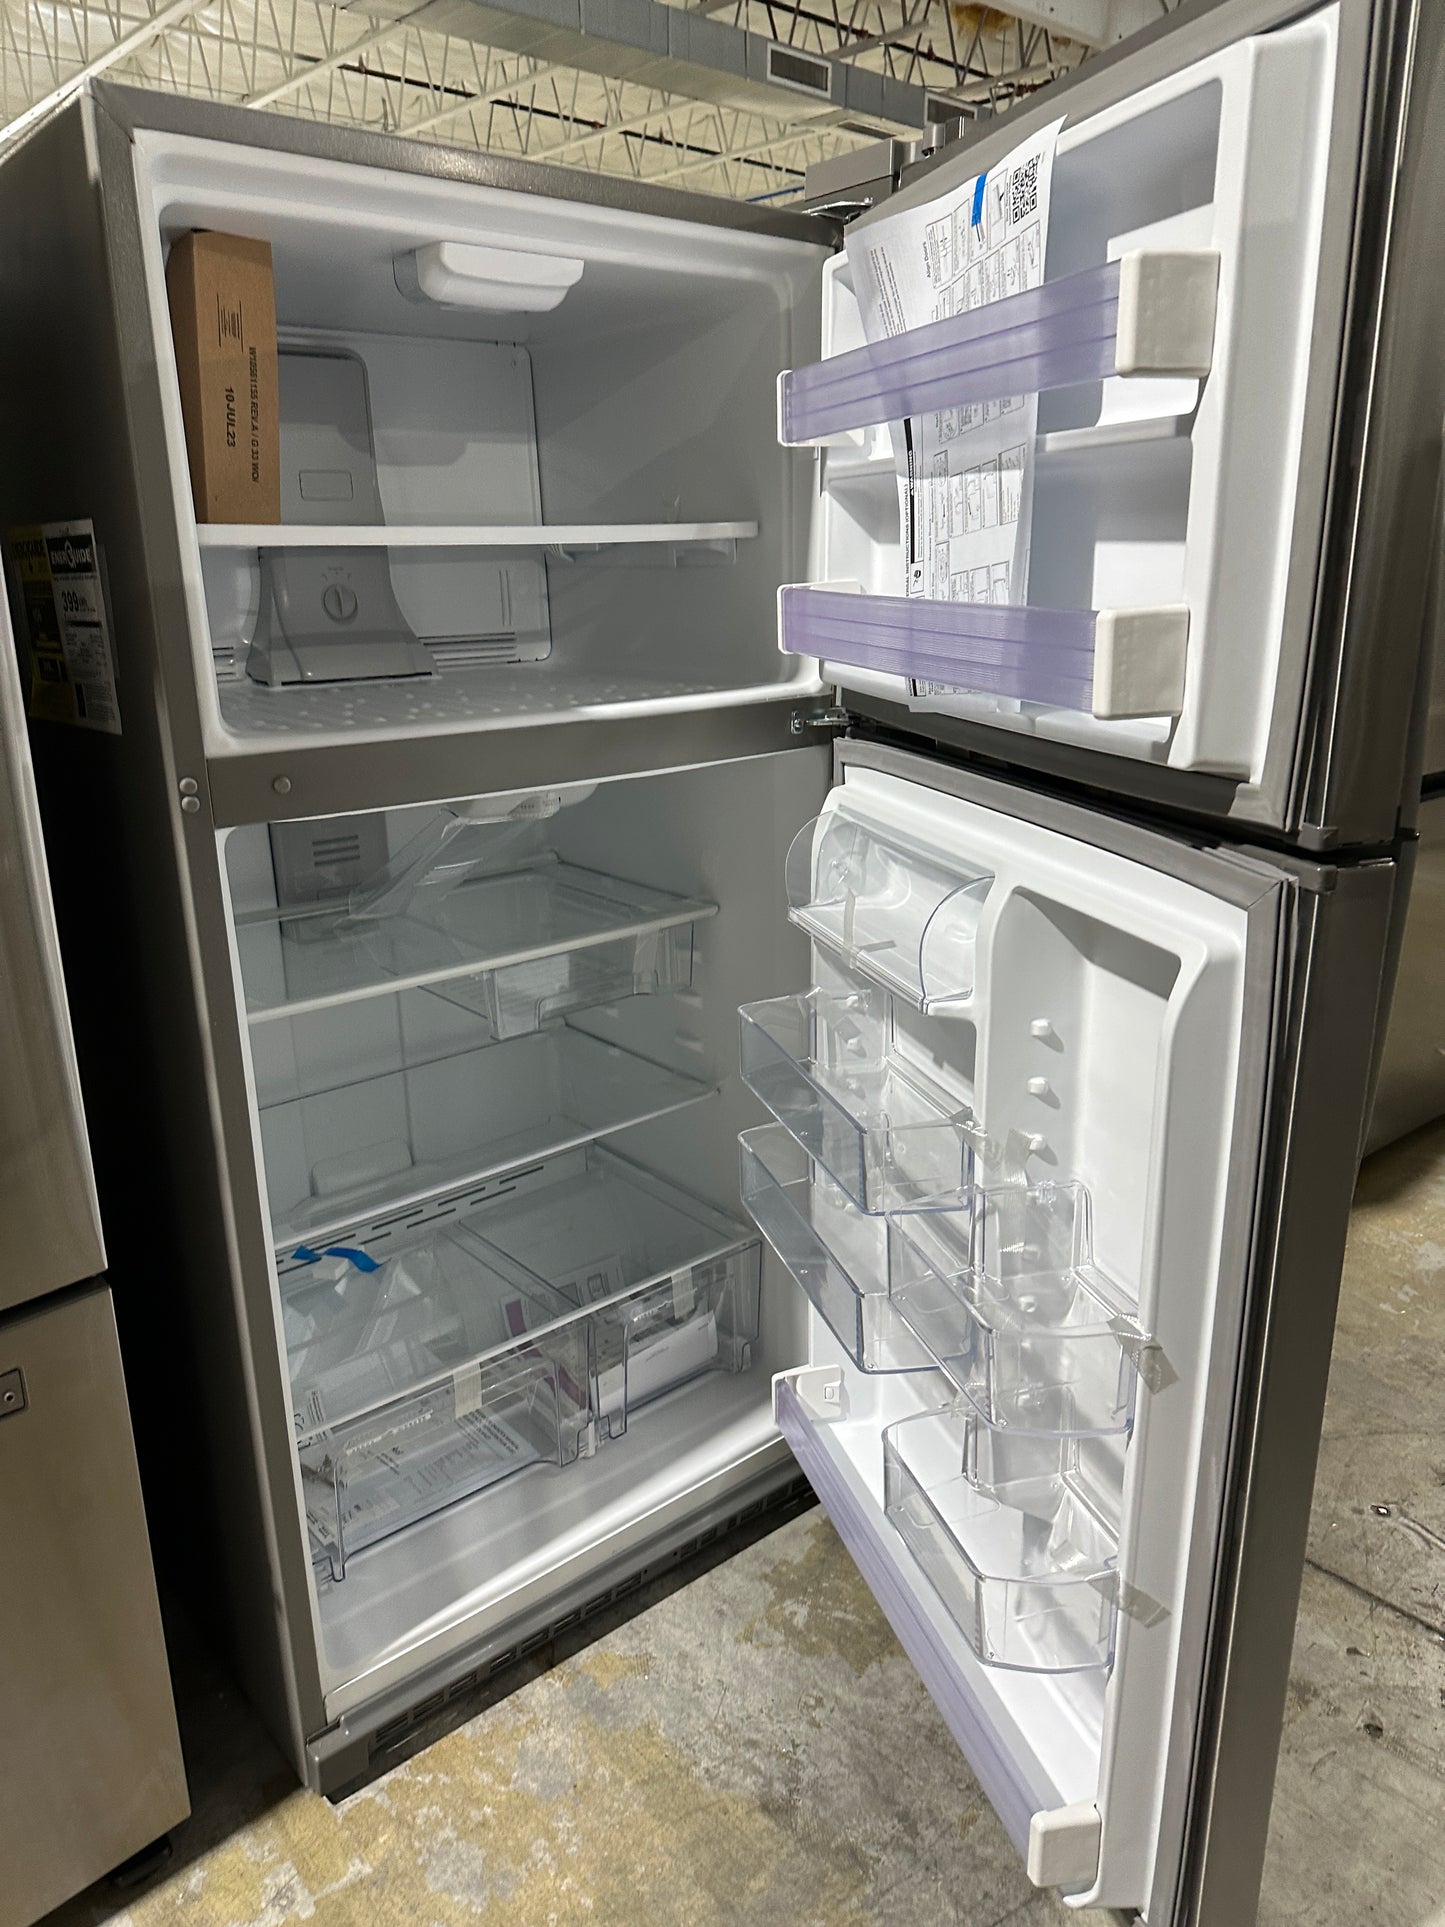 NEW Whirlpool - 21.3 Cu. Ft. Top-Freezer Refrigerator  MODEL: WRT541SZDM  REF12392S